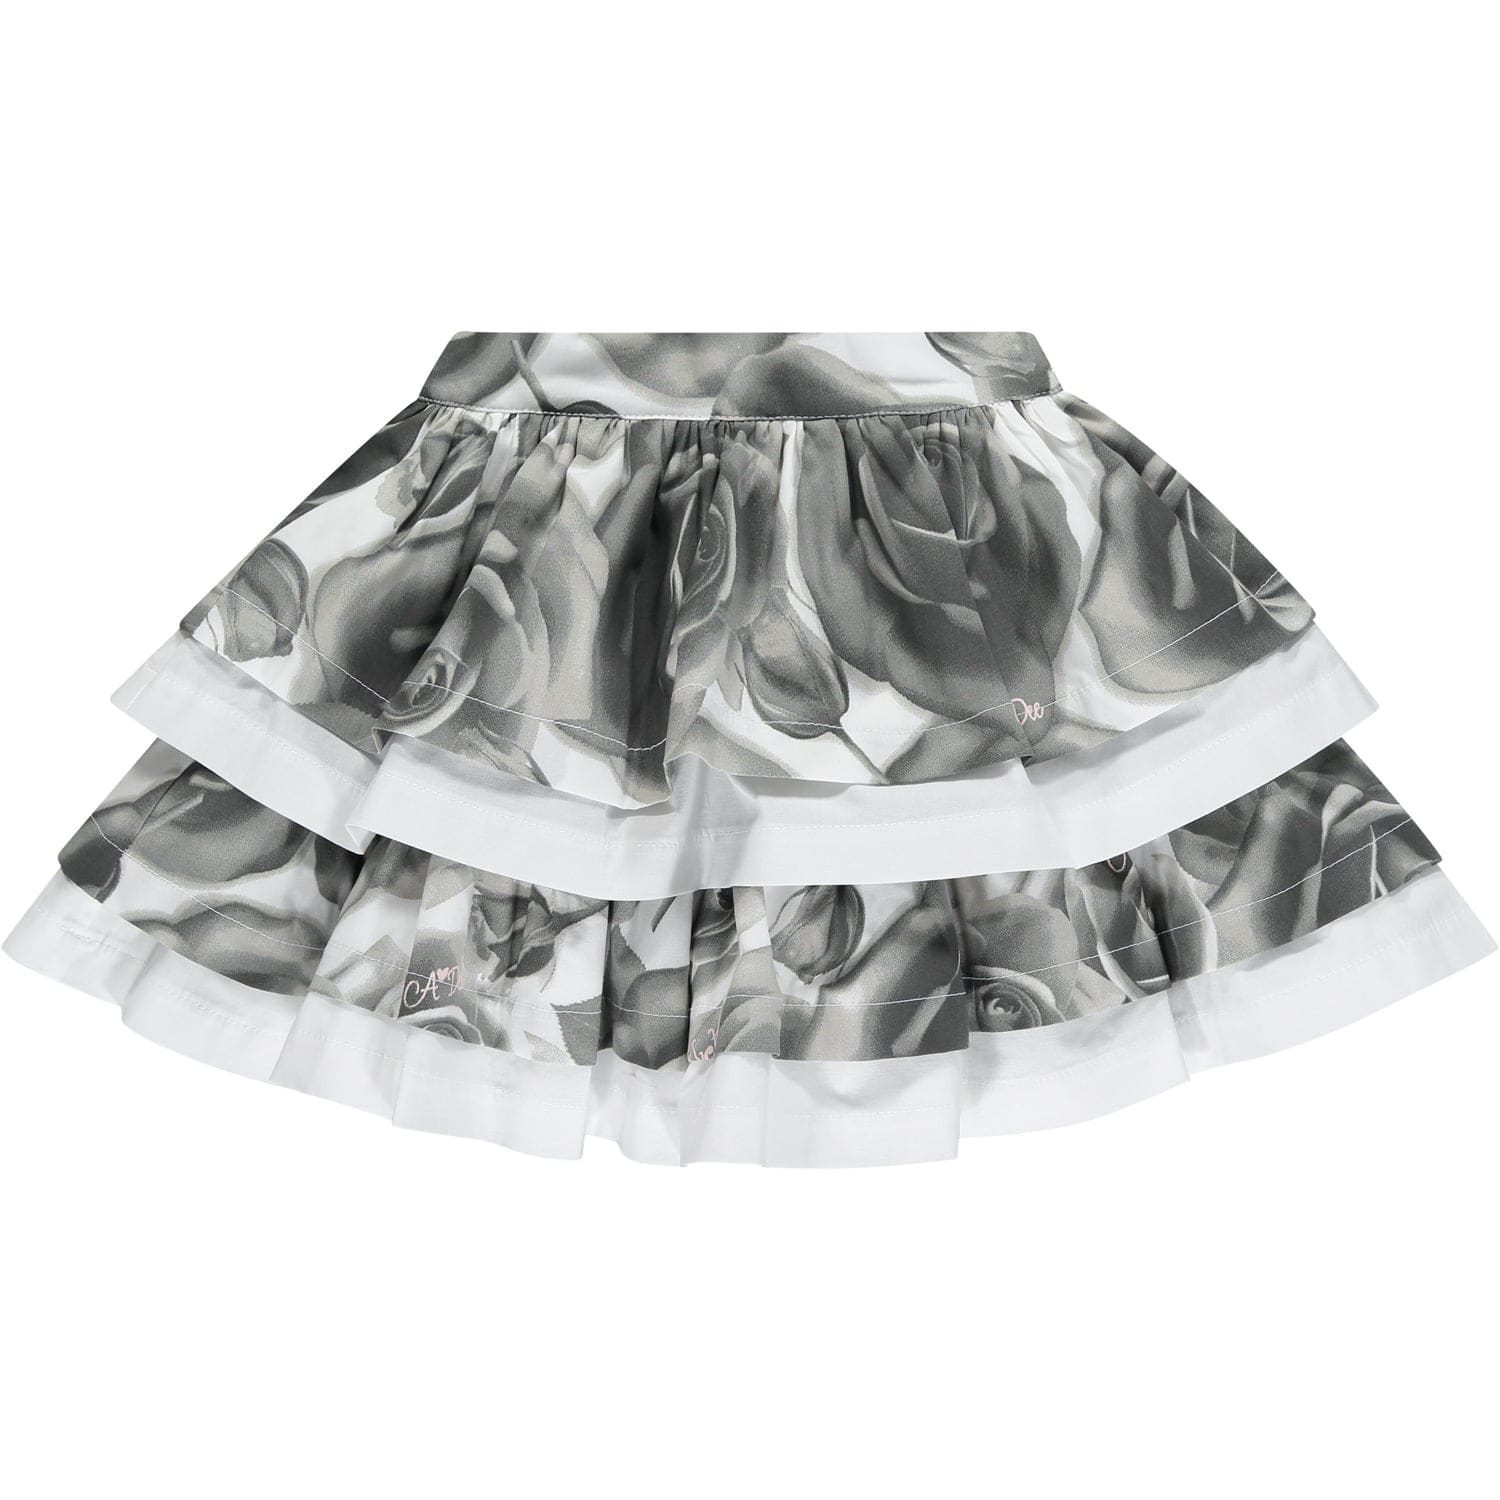 A DEE - Tallulah & Tessy Rose Print Skirt Set - White